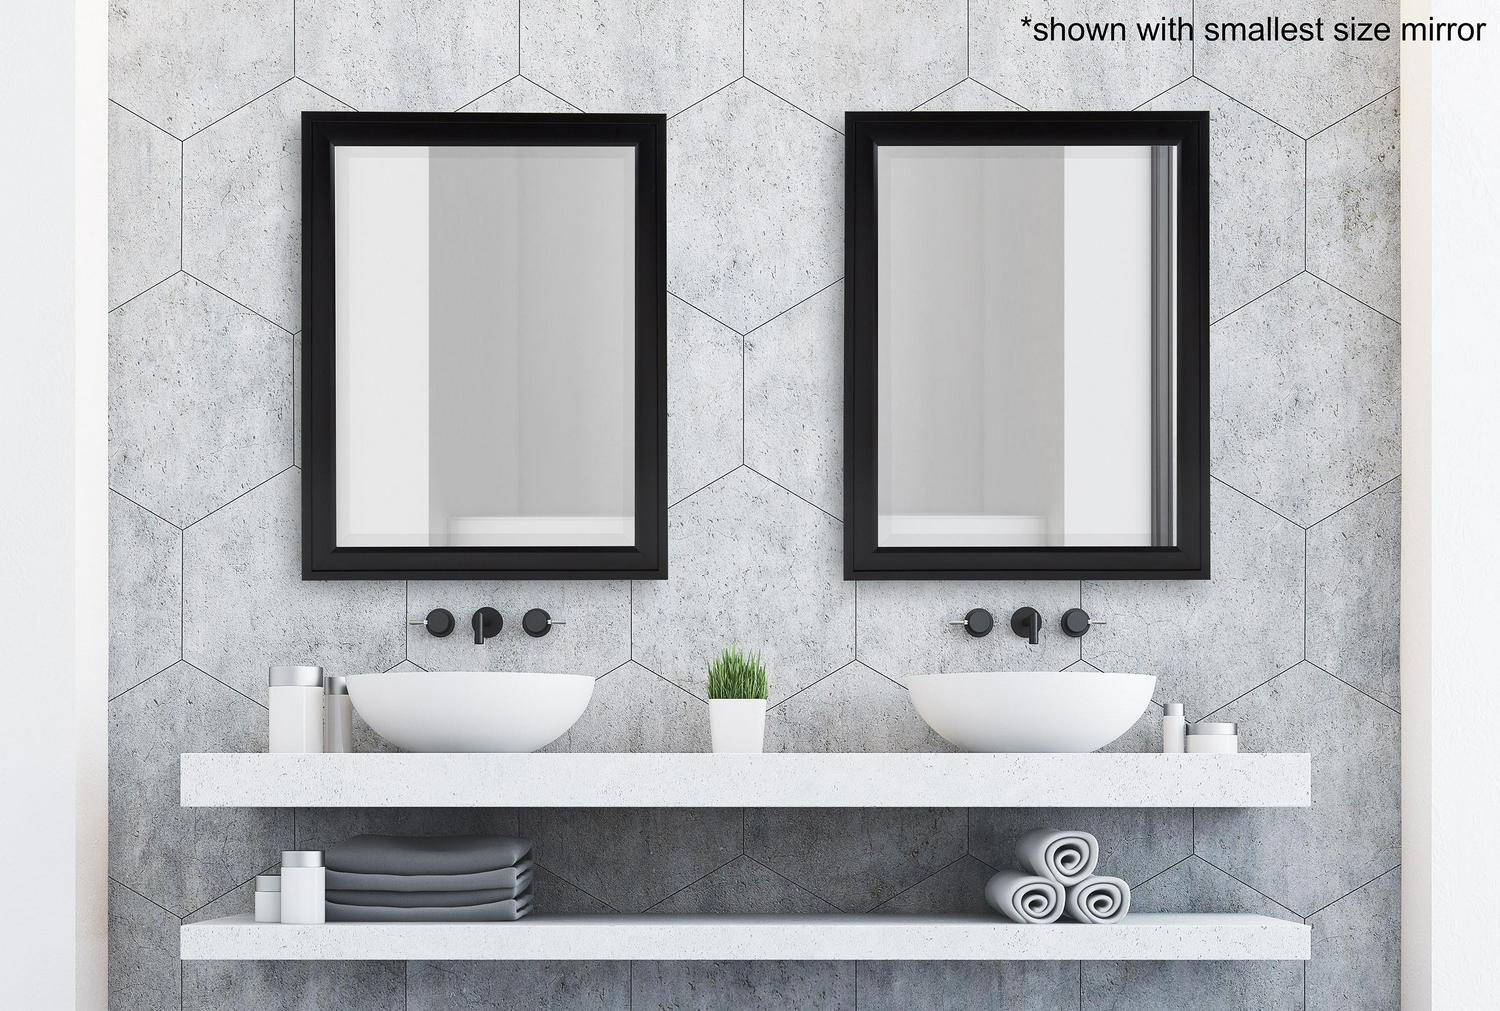 DesignOvation Bosc Framed Decorative Rectangle Wall Mirror， 27.5and#215;39.5 Black